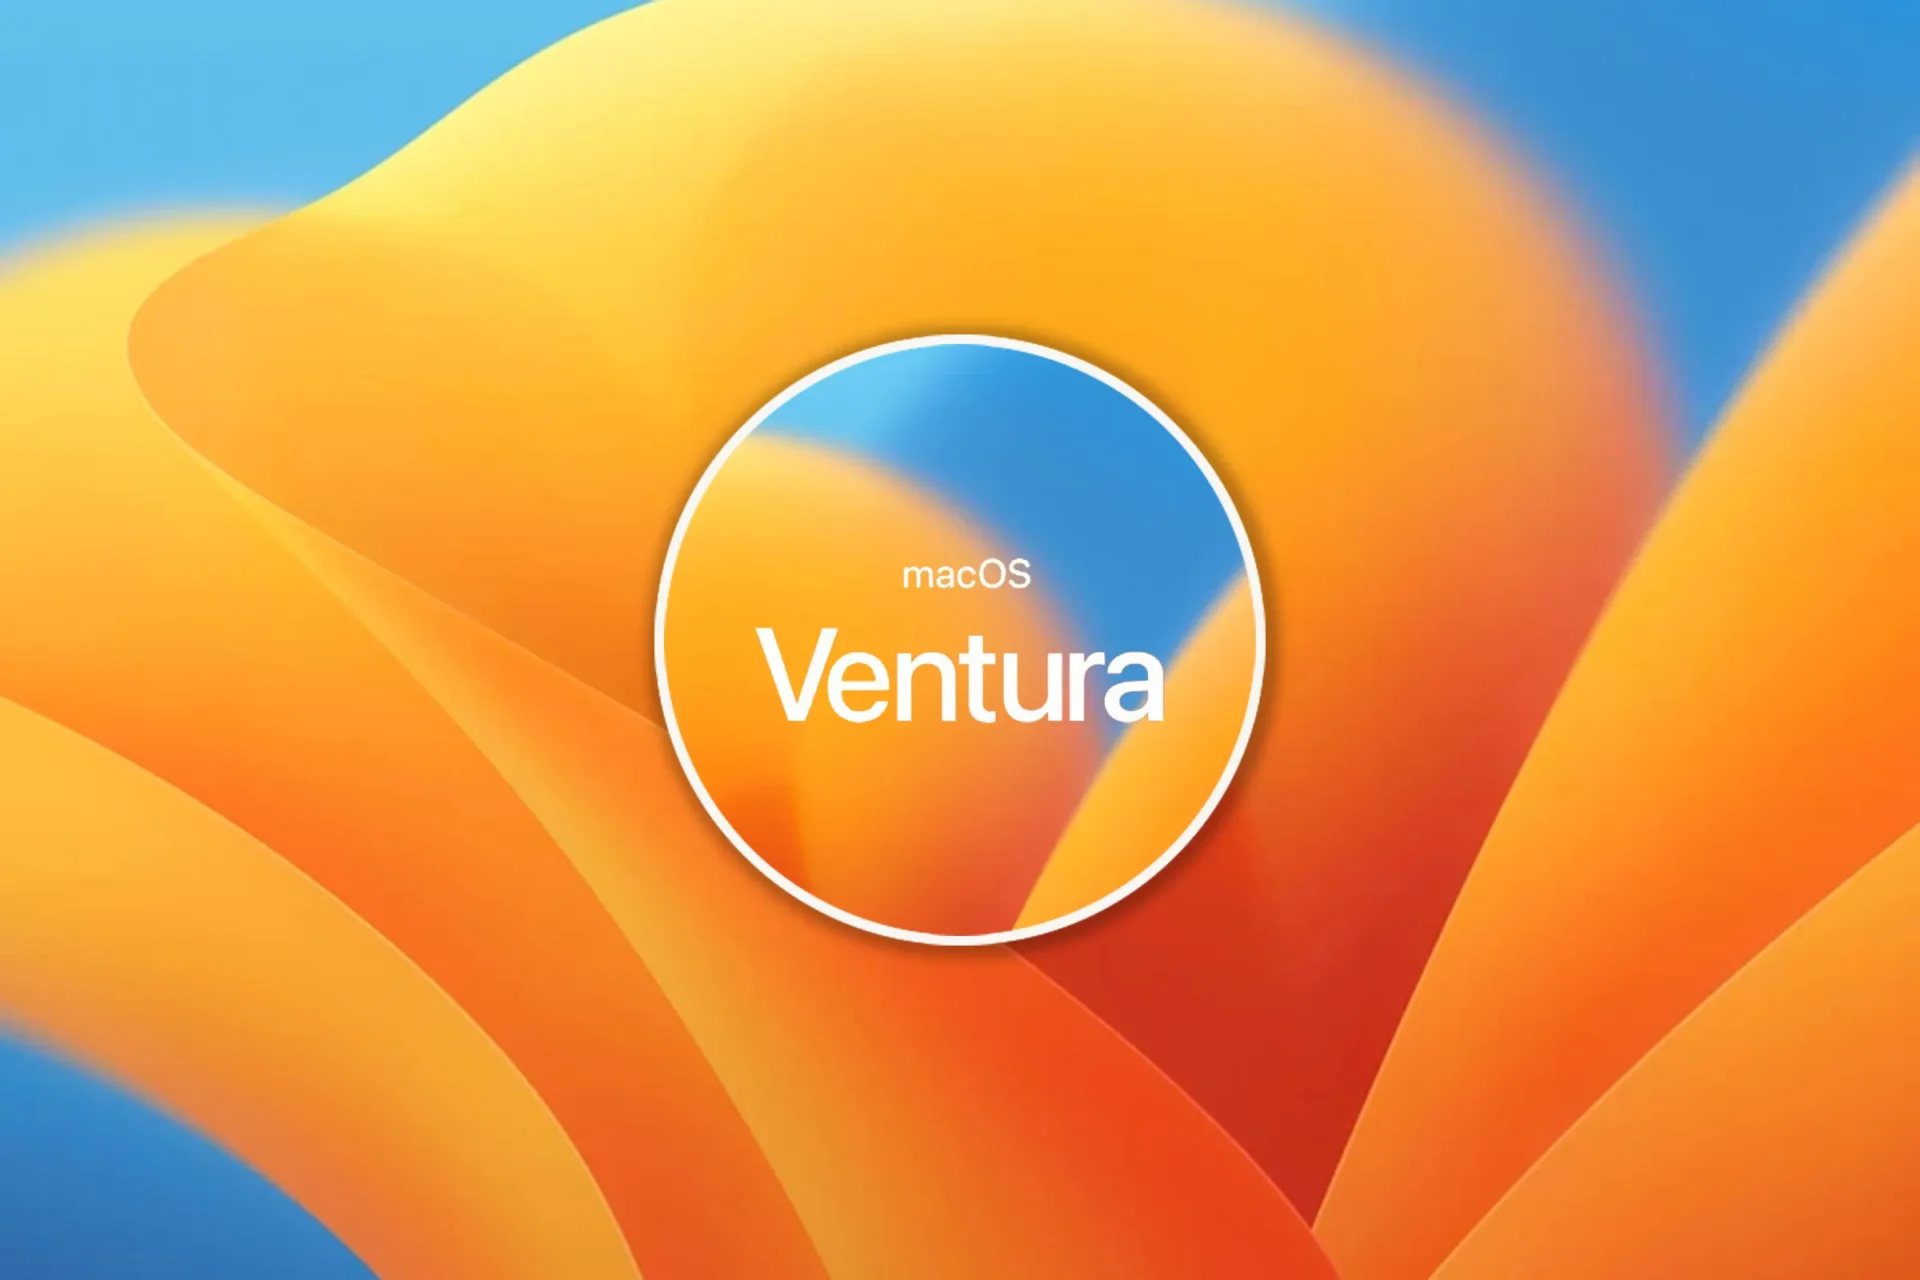 MacOS Ventura features